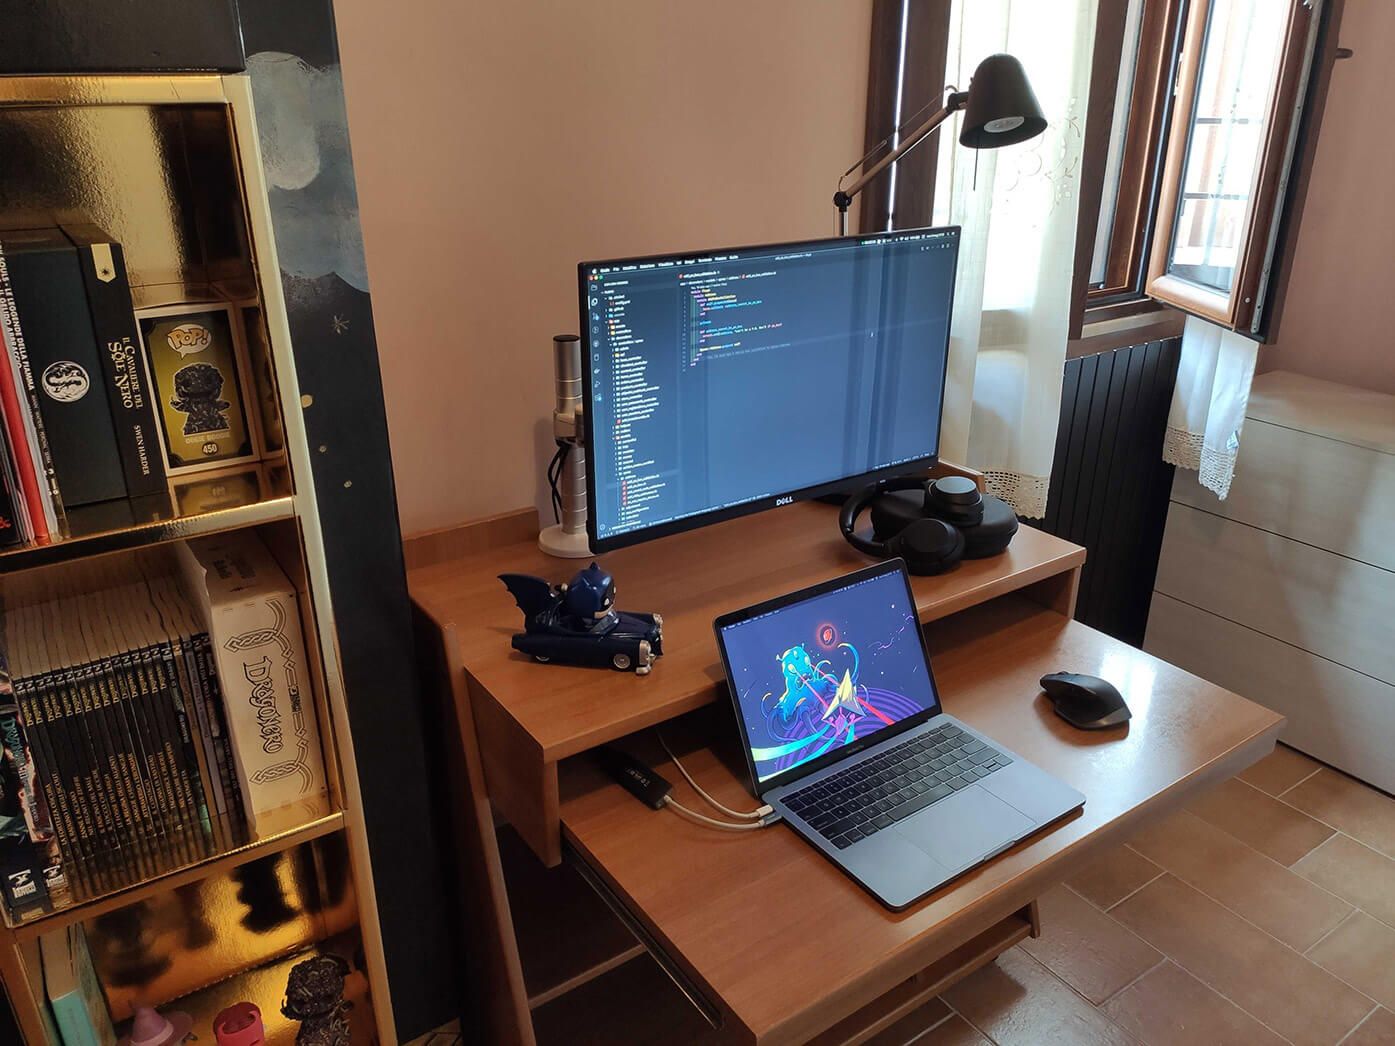 Christian's home office setup